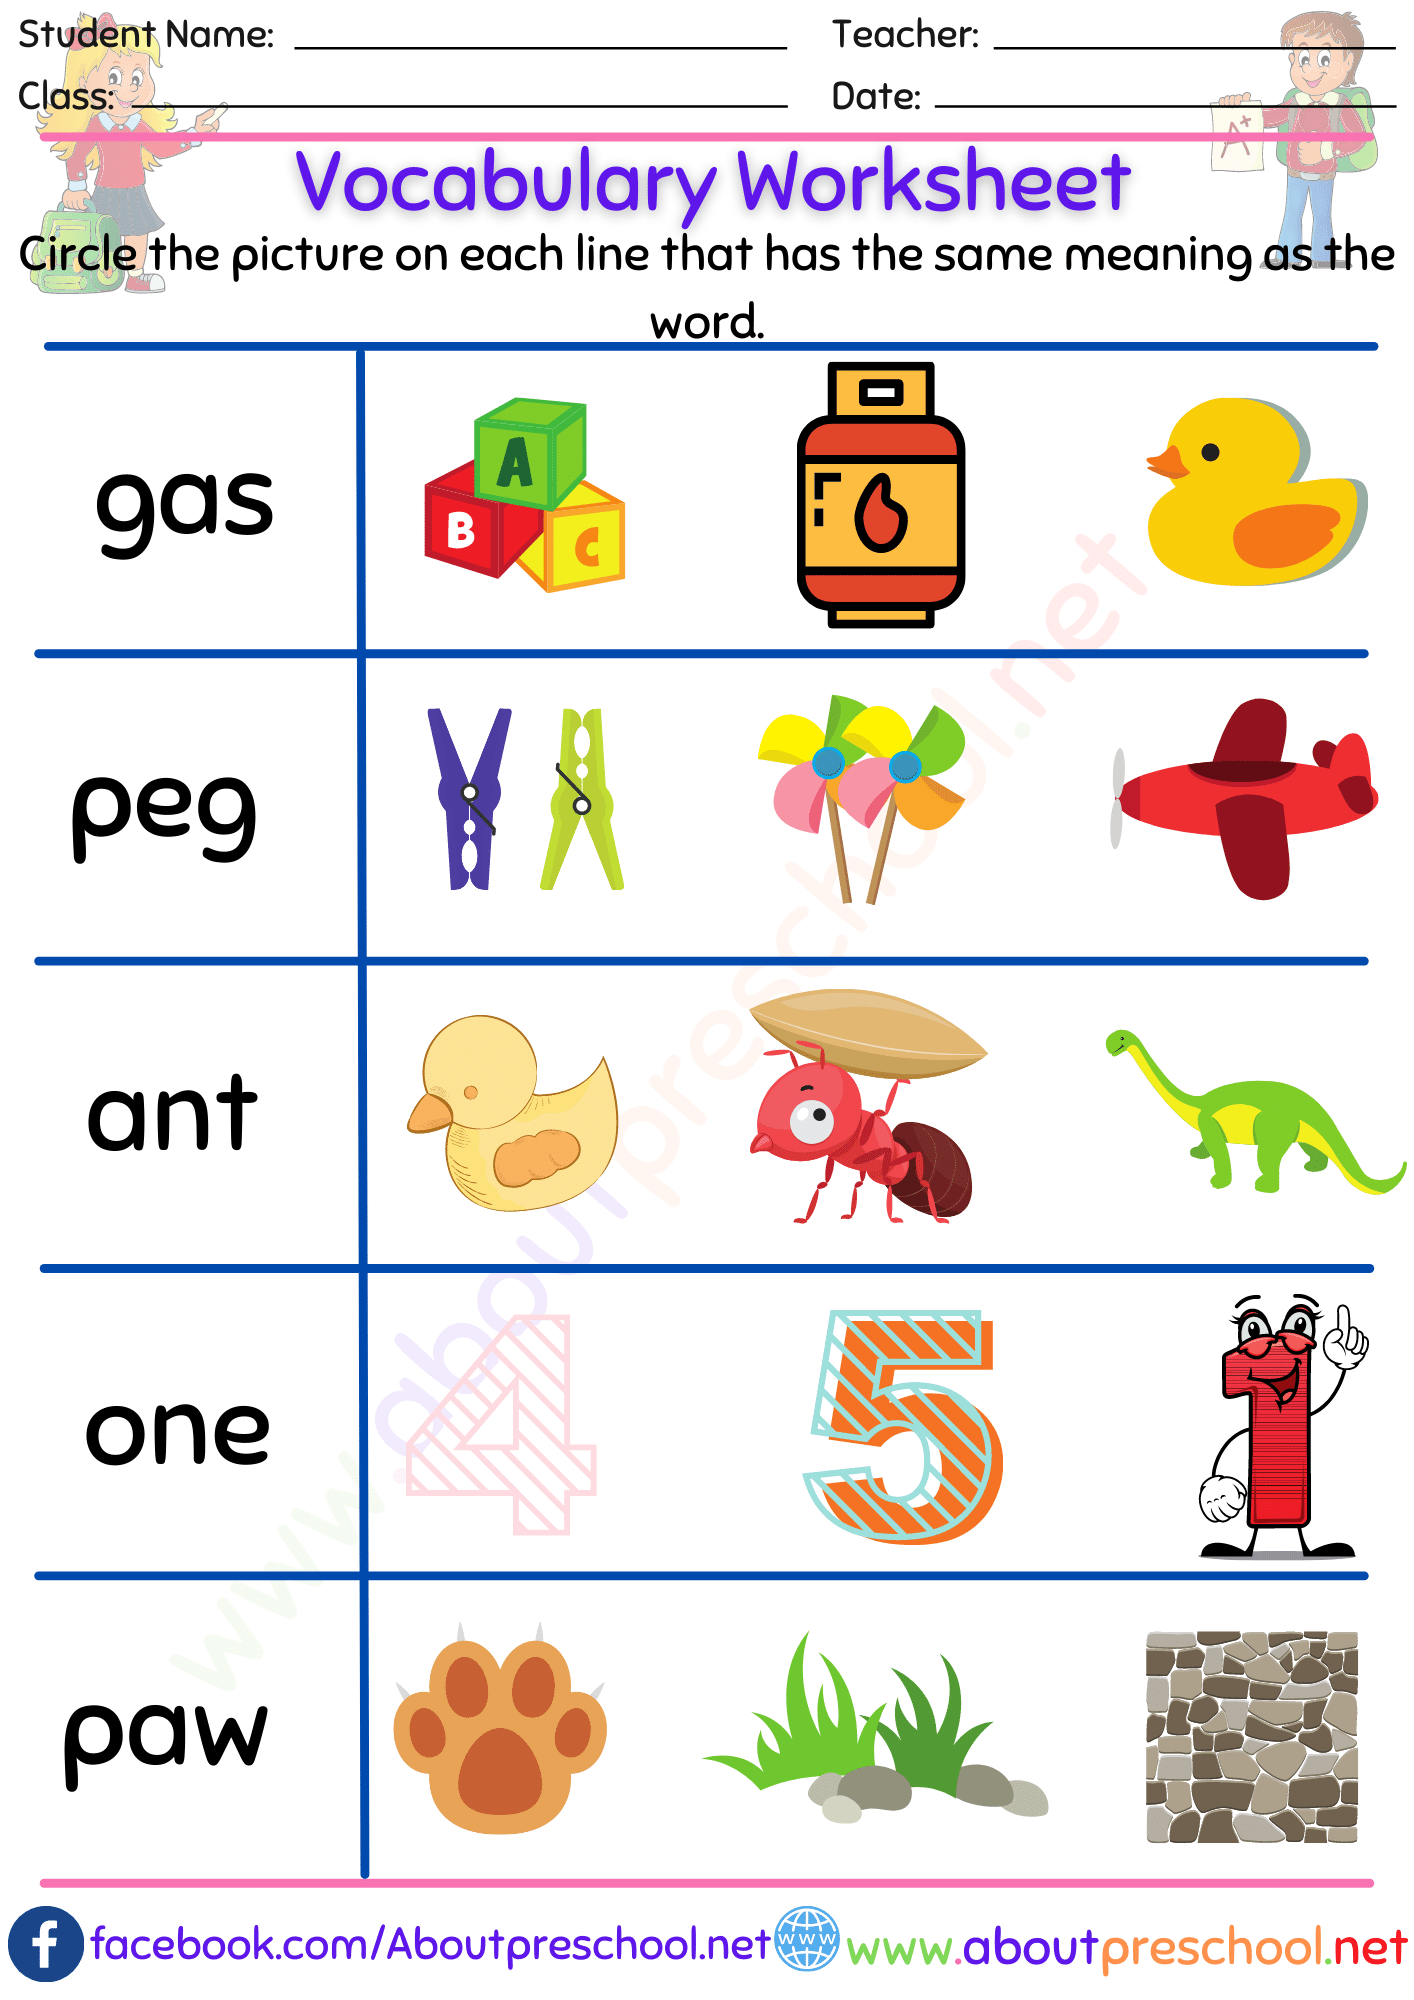 Vocabulary Worksheet-13